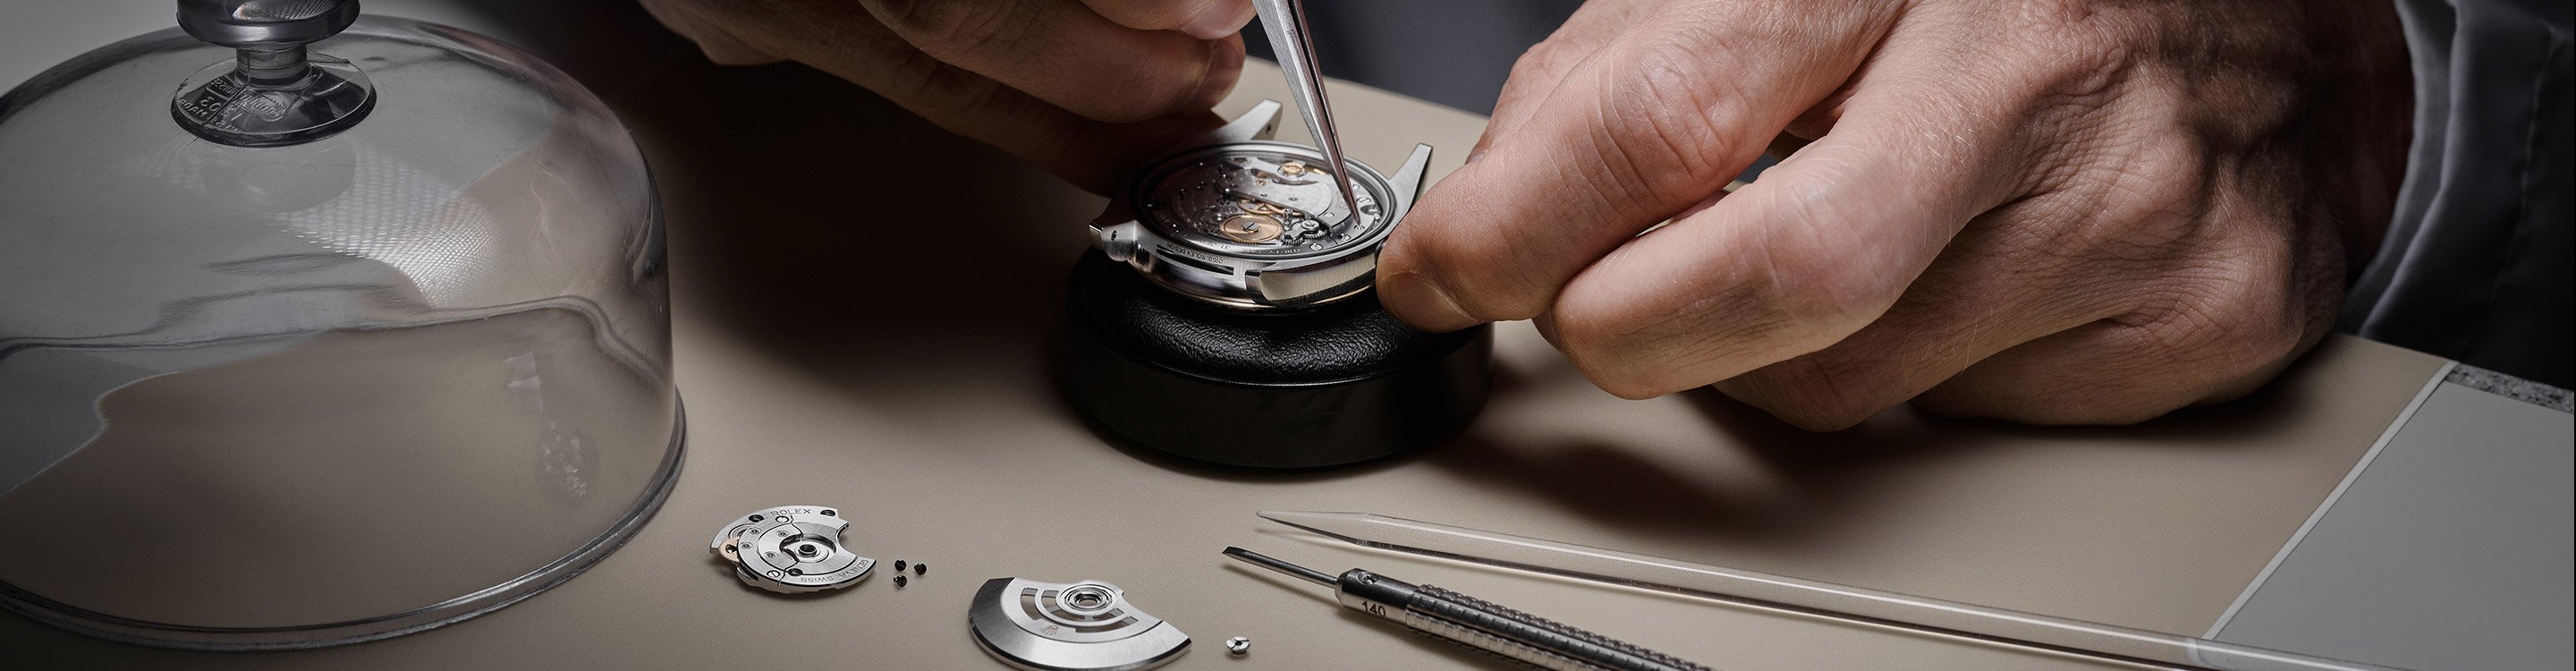 Rolex expert working on watch, deconstructed parts